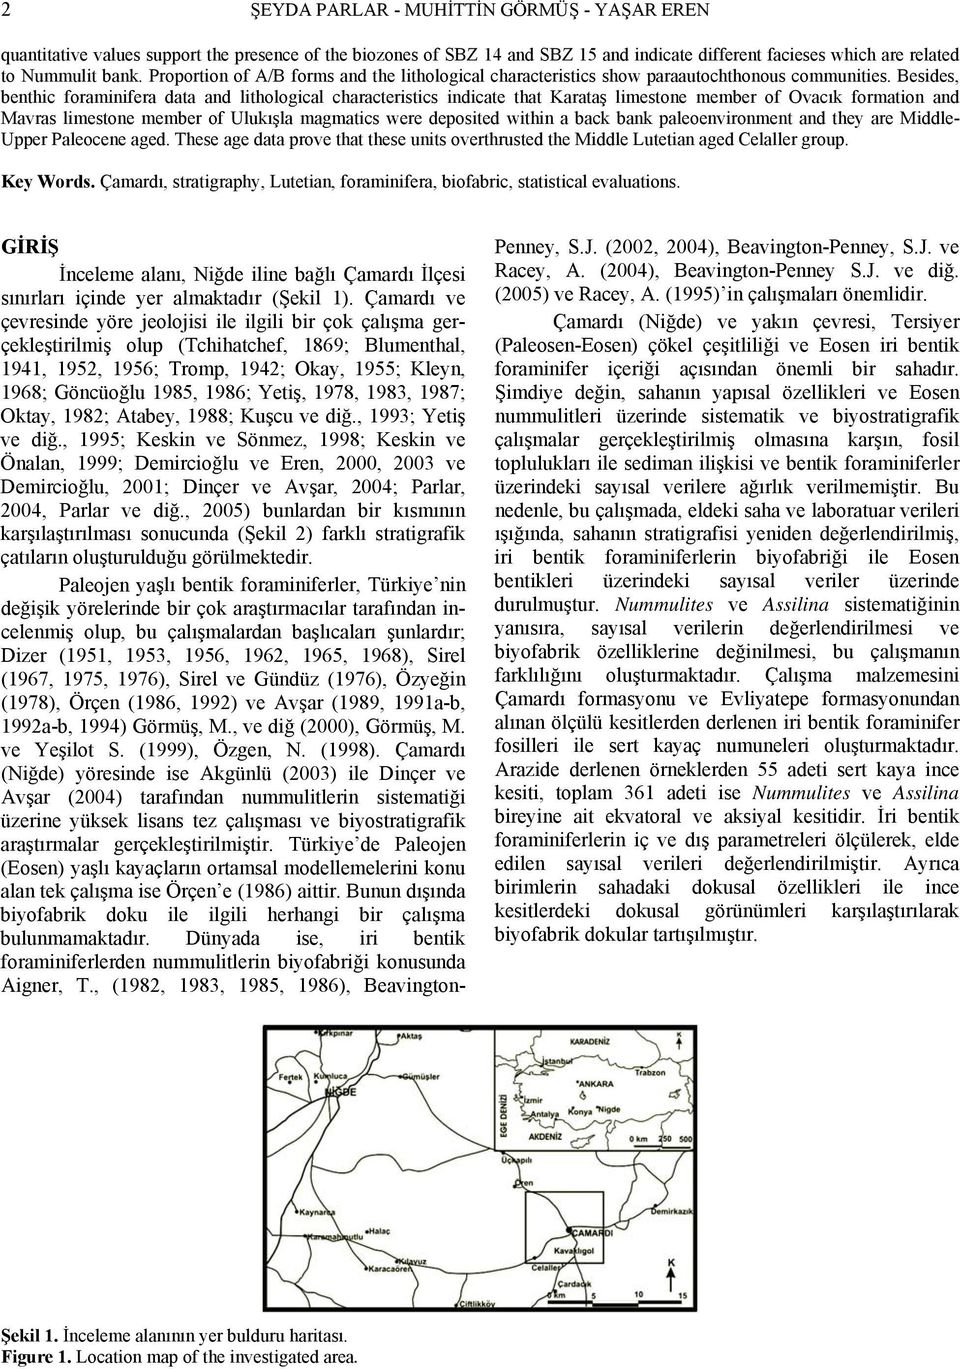 Besides, benthic foraminifera data and lithological characteristics indicate that Karataş limestone member of Ovacık formation and Mavras limestone member of Ulukışla magmatics were deposited within